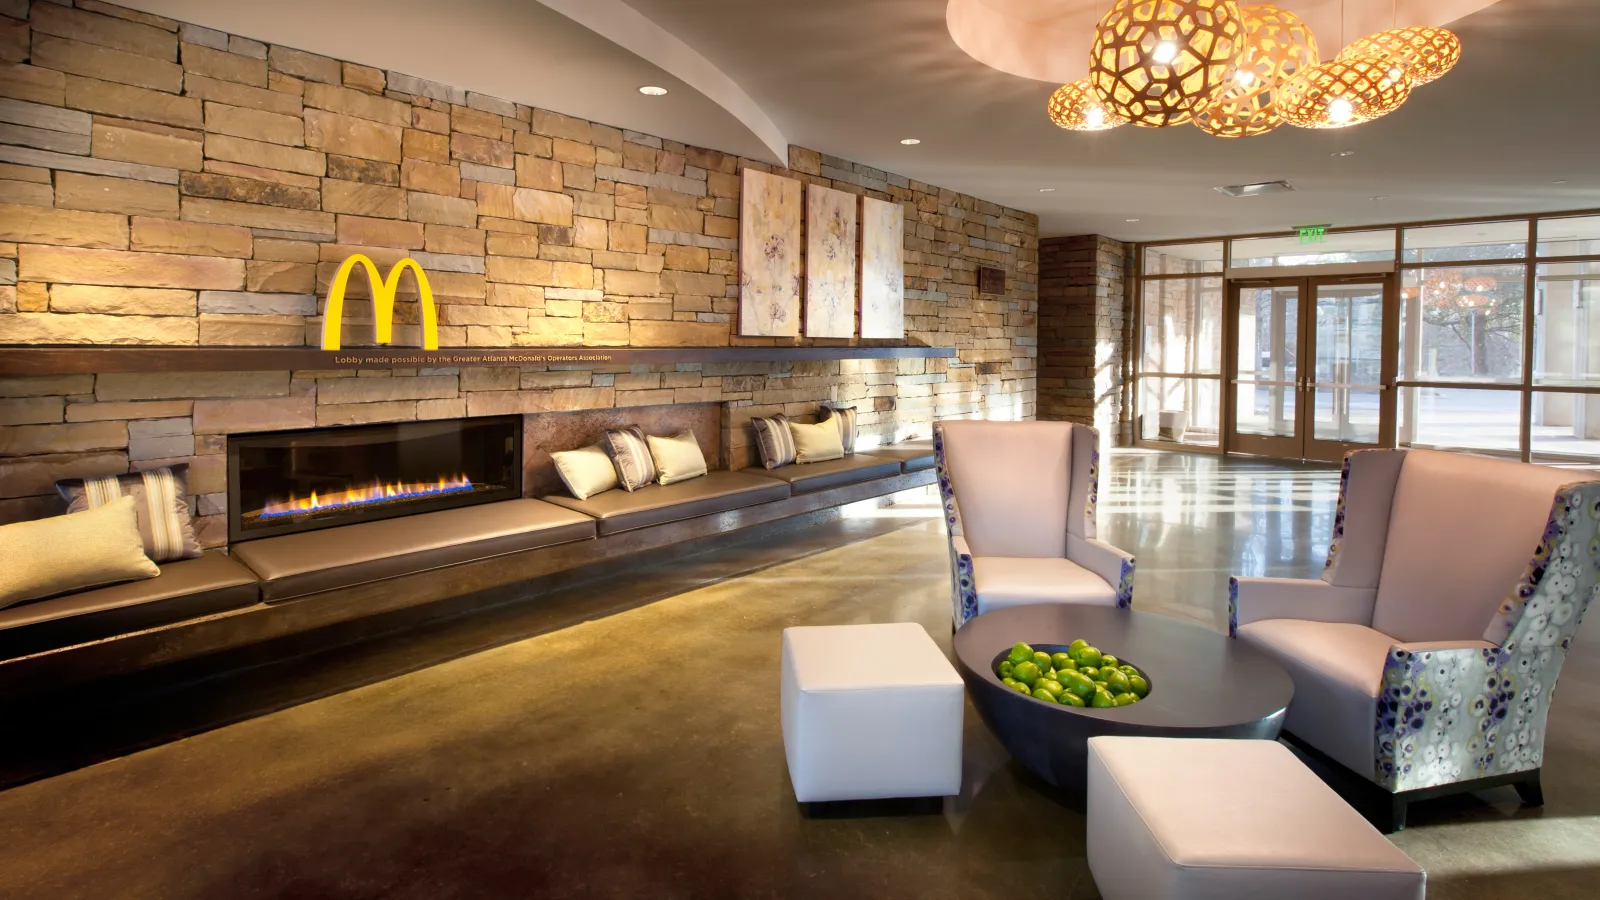 Ronald McDonald House Charities lobby